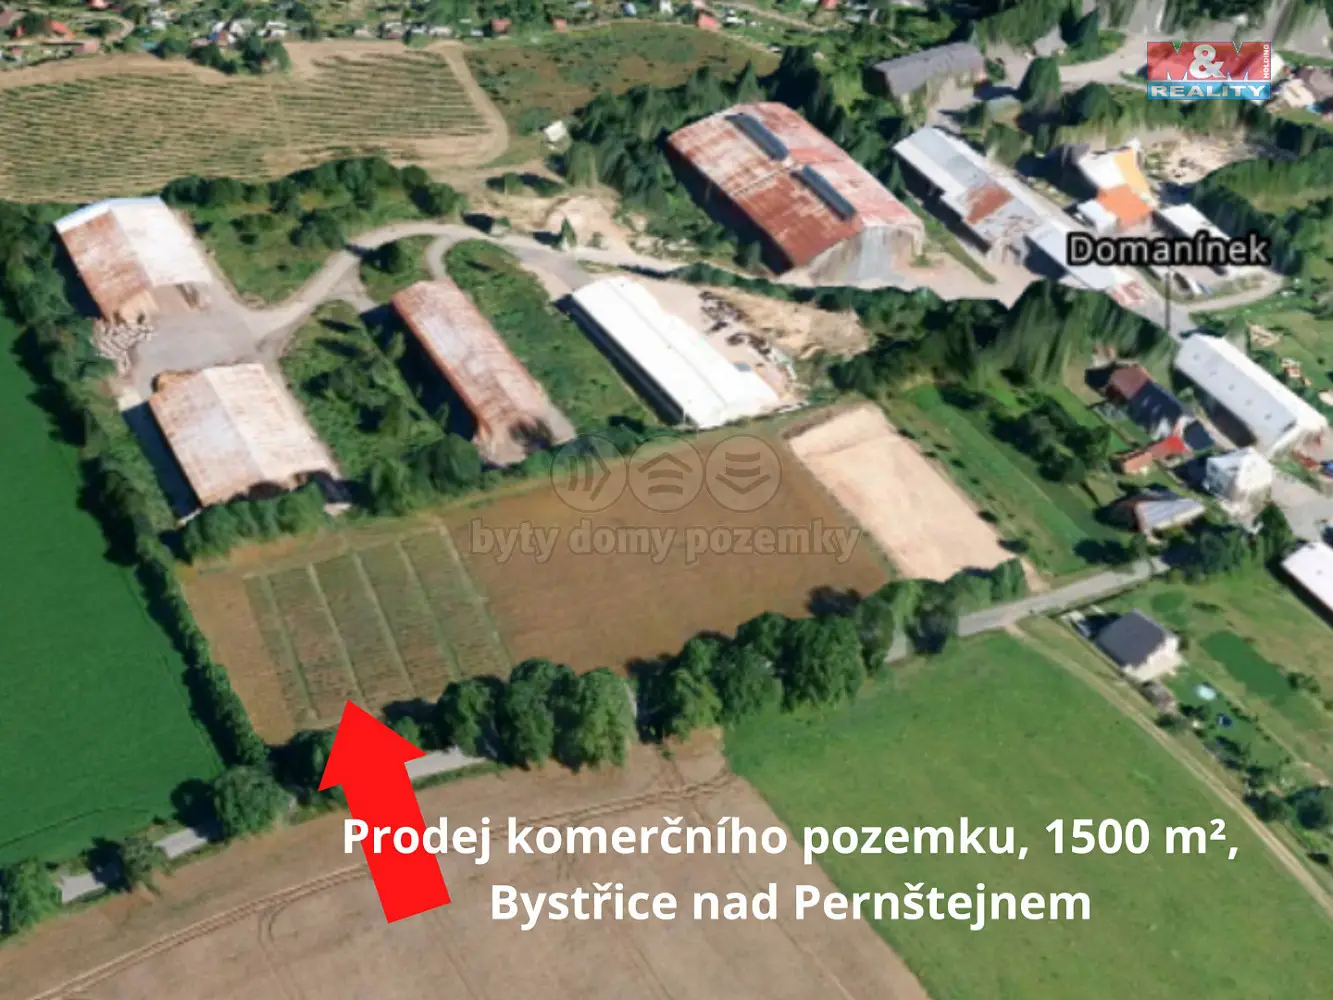 Bystřice nad Pernštejnem - Domanínek, okres Žďár nad Sázavou